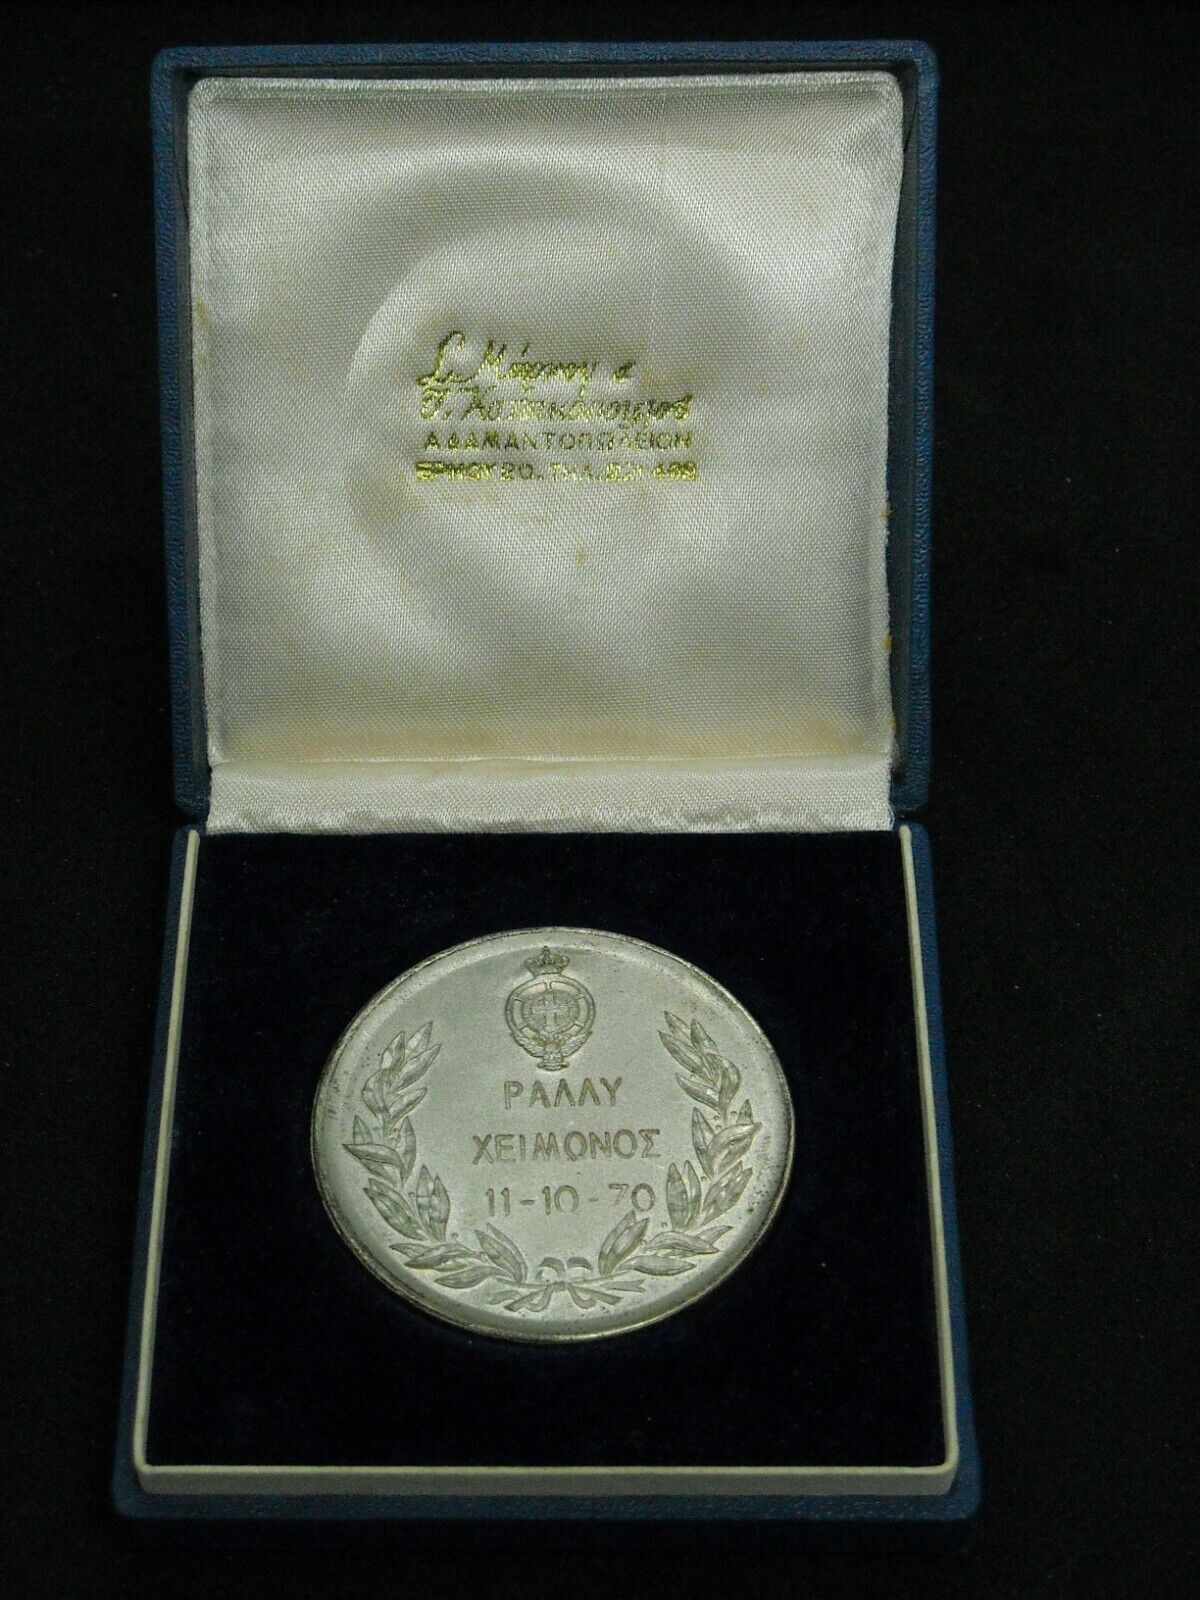 11/10/1970 Greek Vintage Medal \